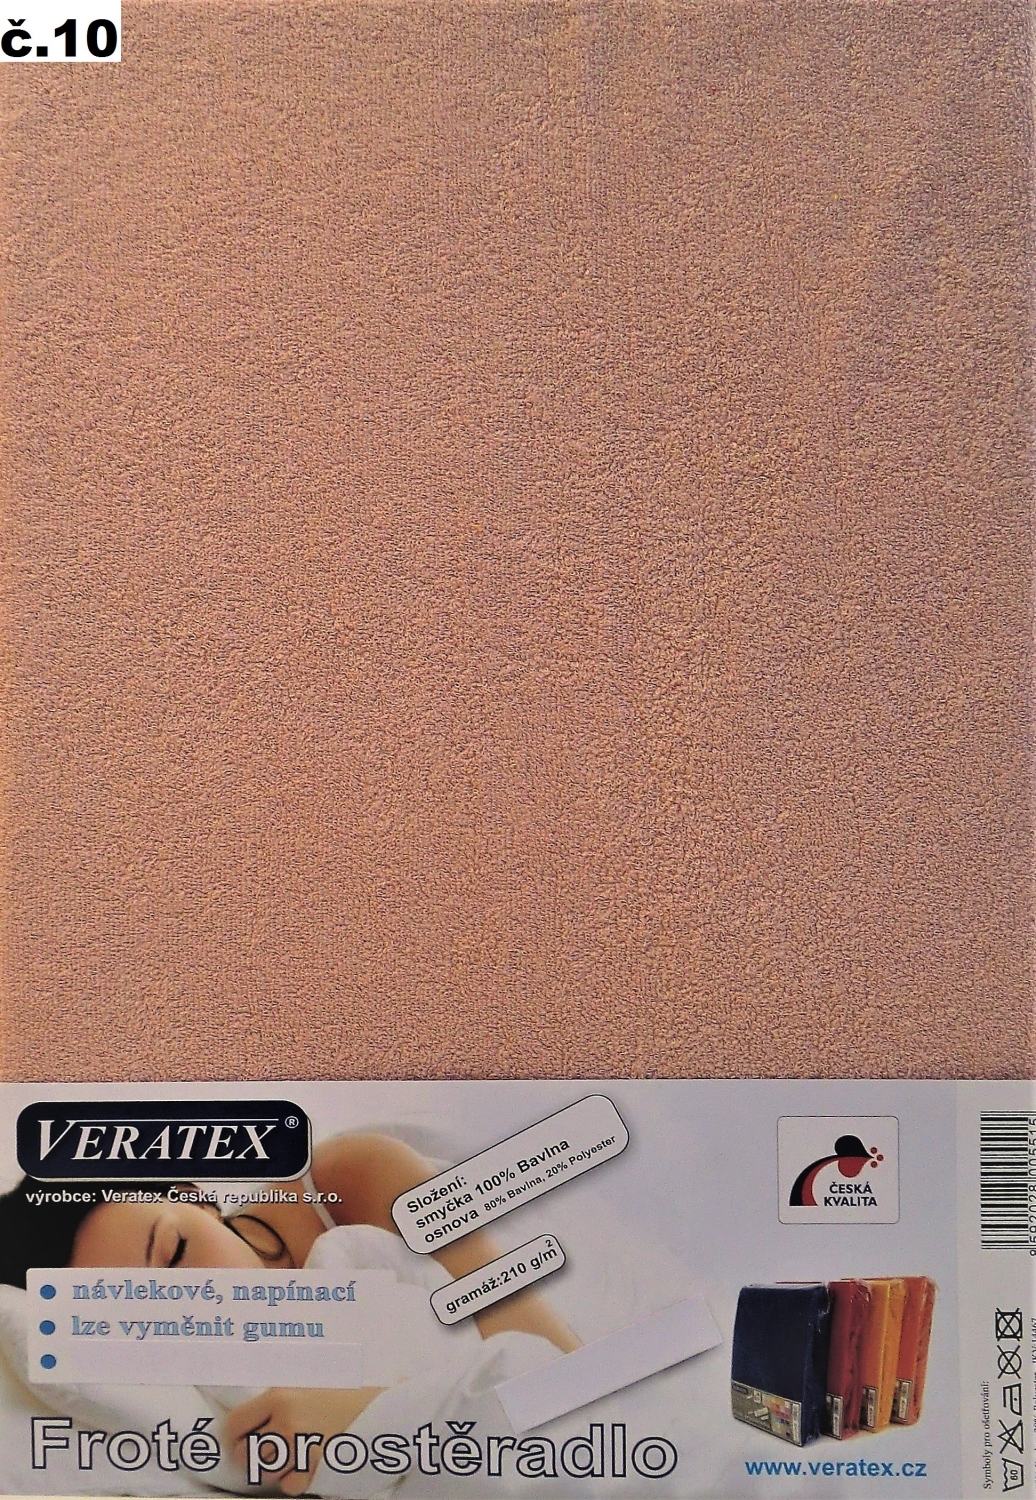 Veratex Froté prostěradlo jednolůžko 90x200/40cm (č.10-starorůžové)